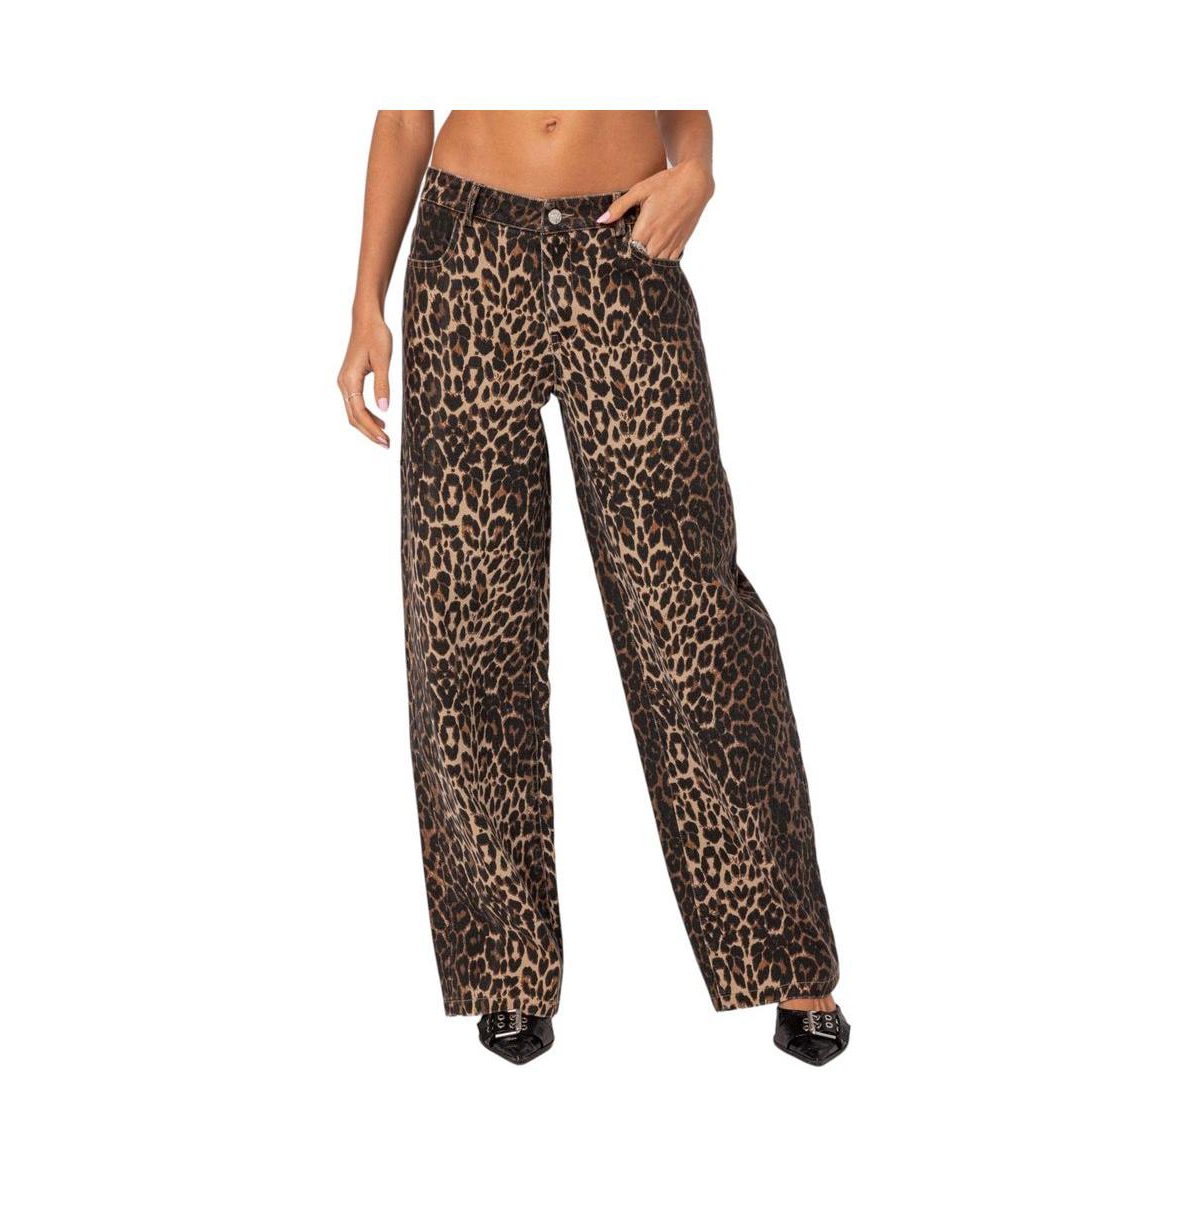 Women's Leopard Printed Low Rise Jeans - Leopard